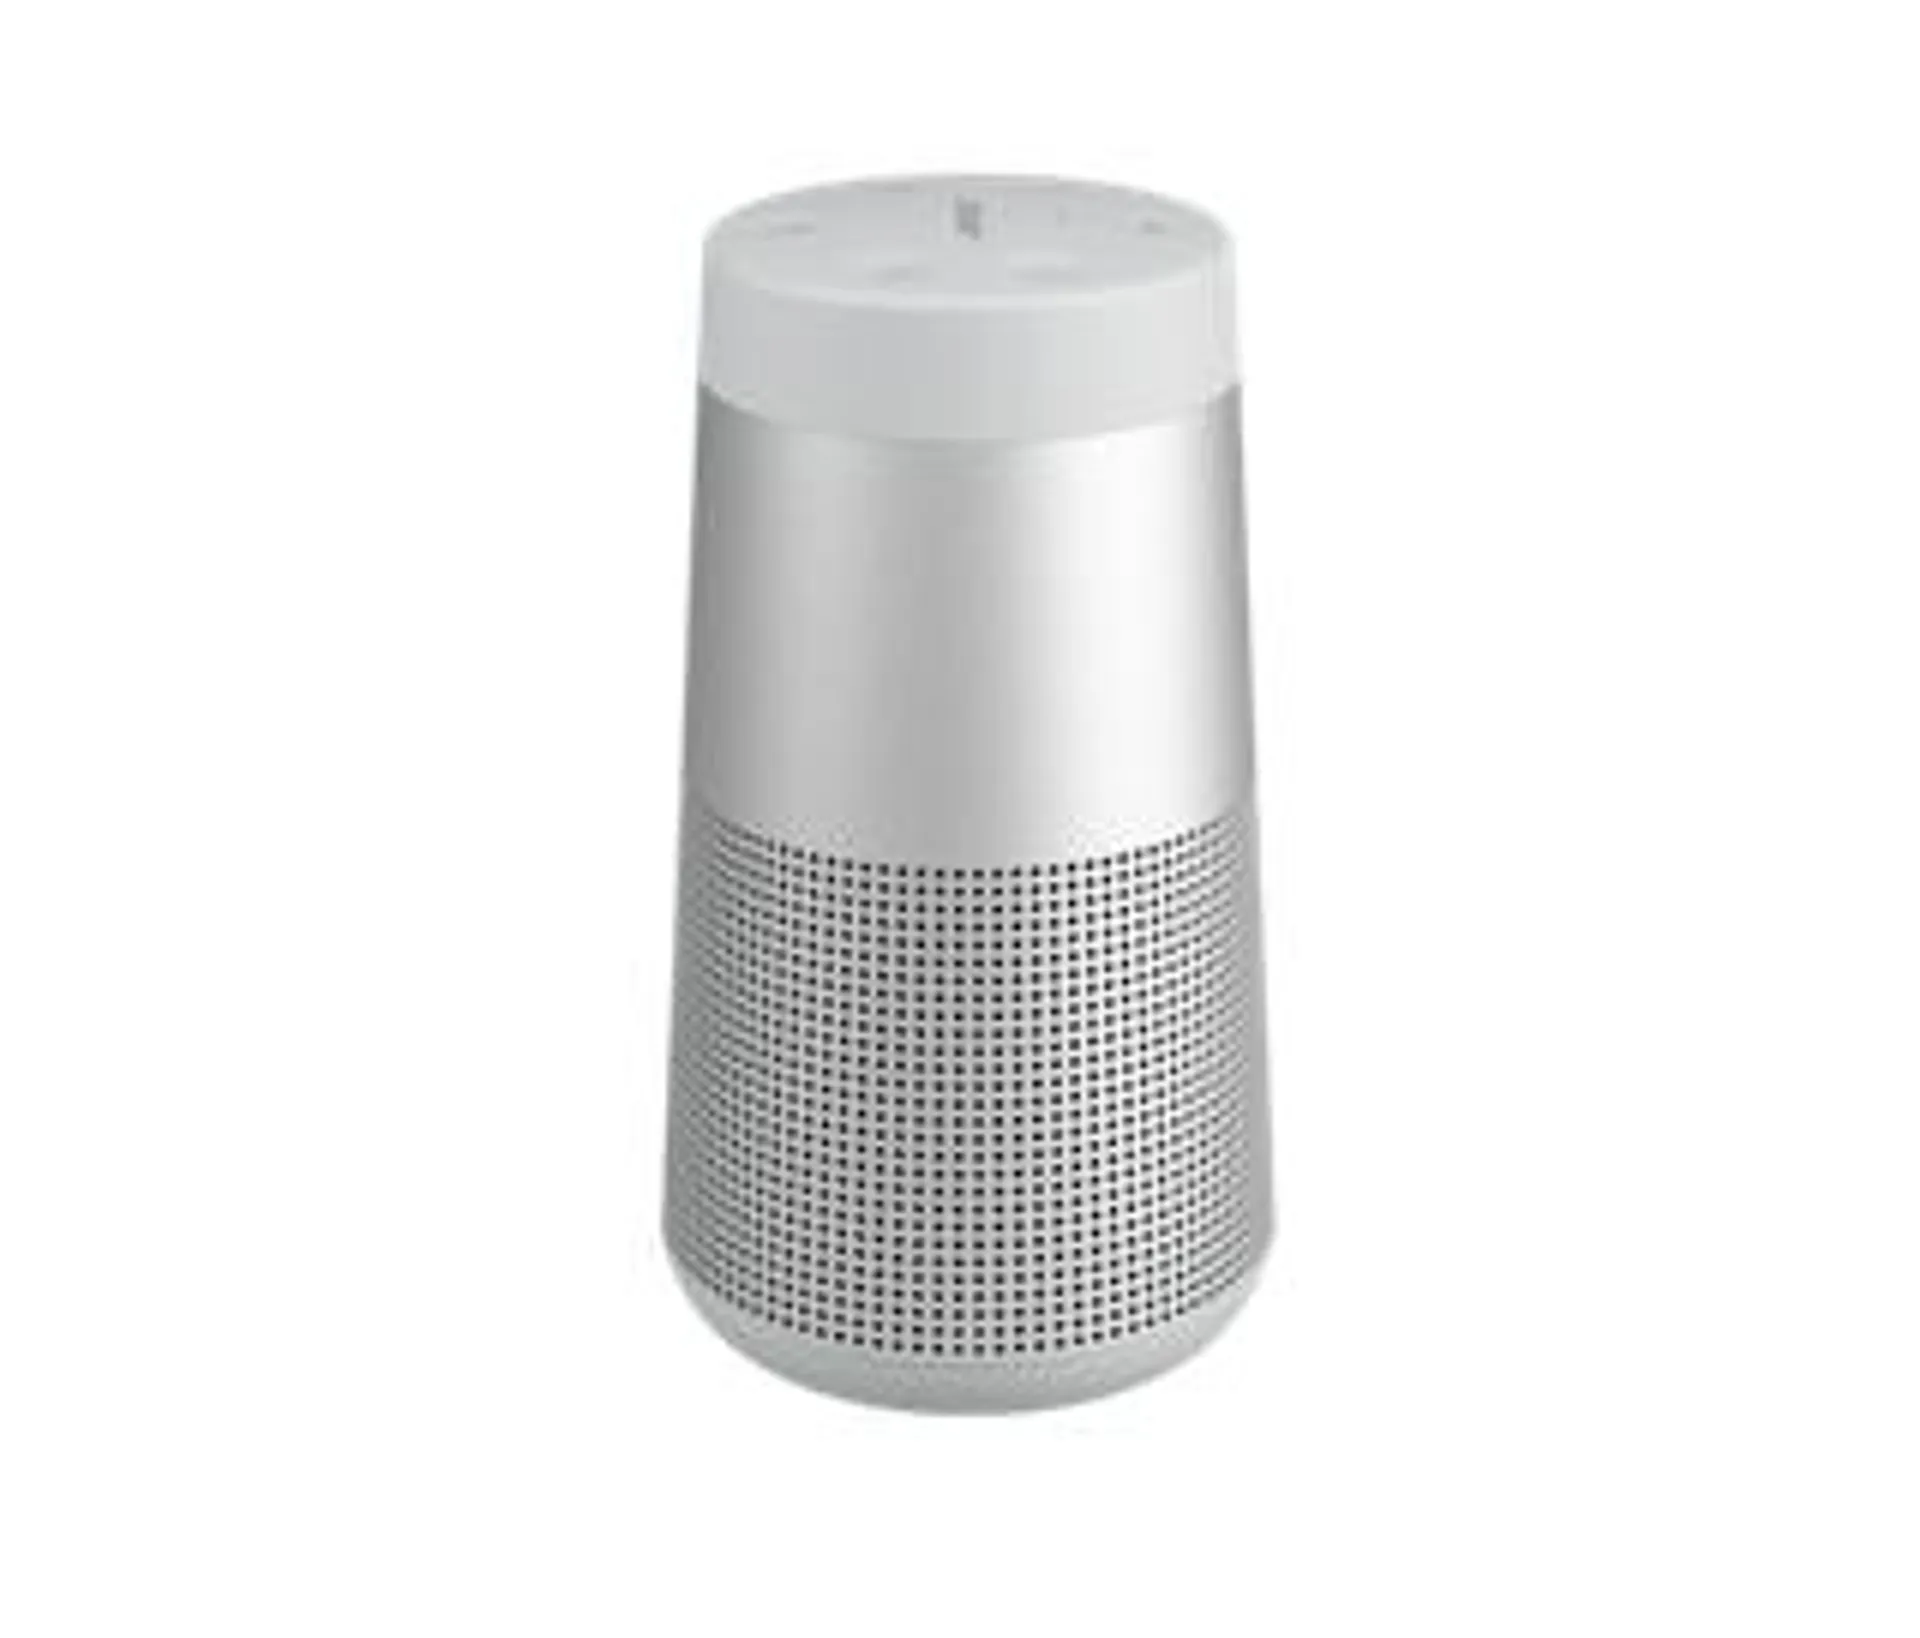 SoundLink Revolve II Bluetooth® speaker